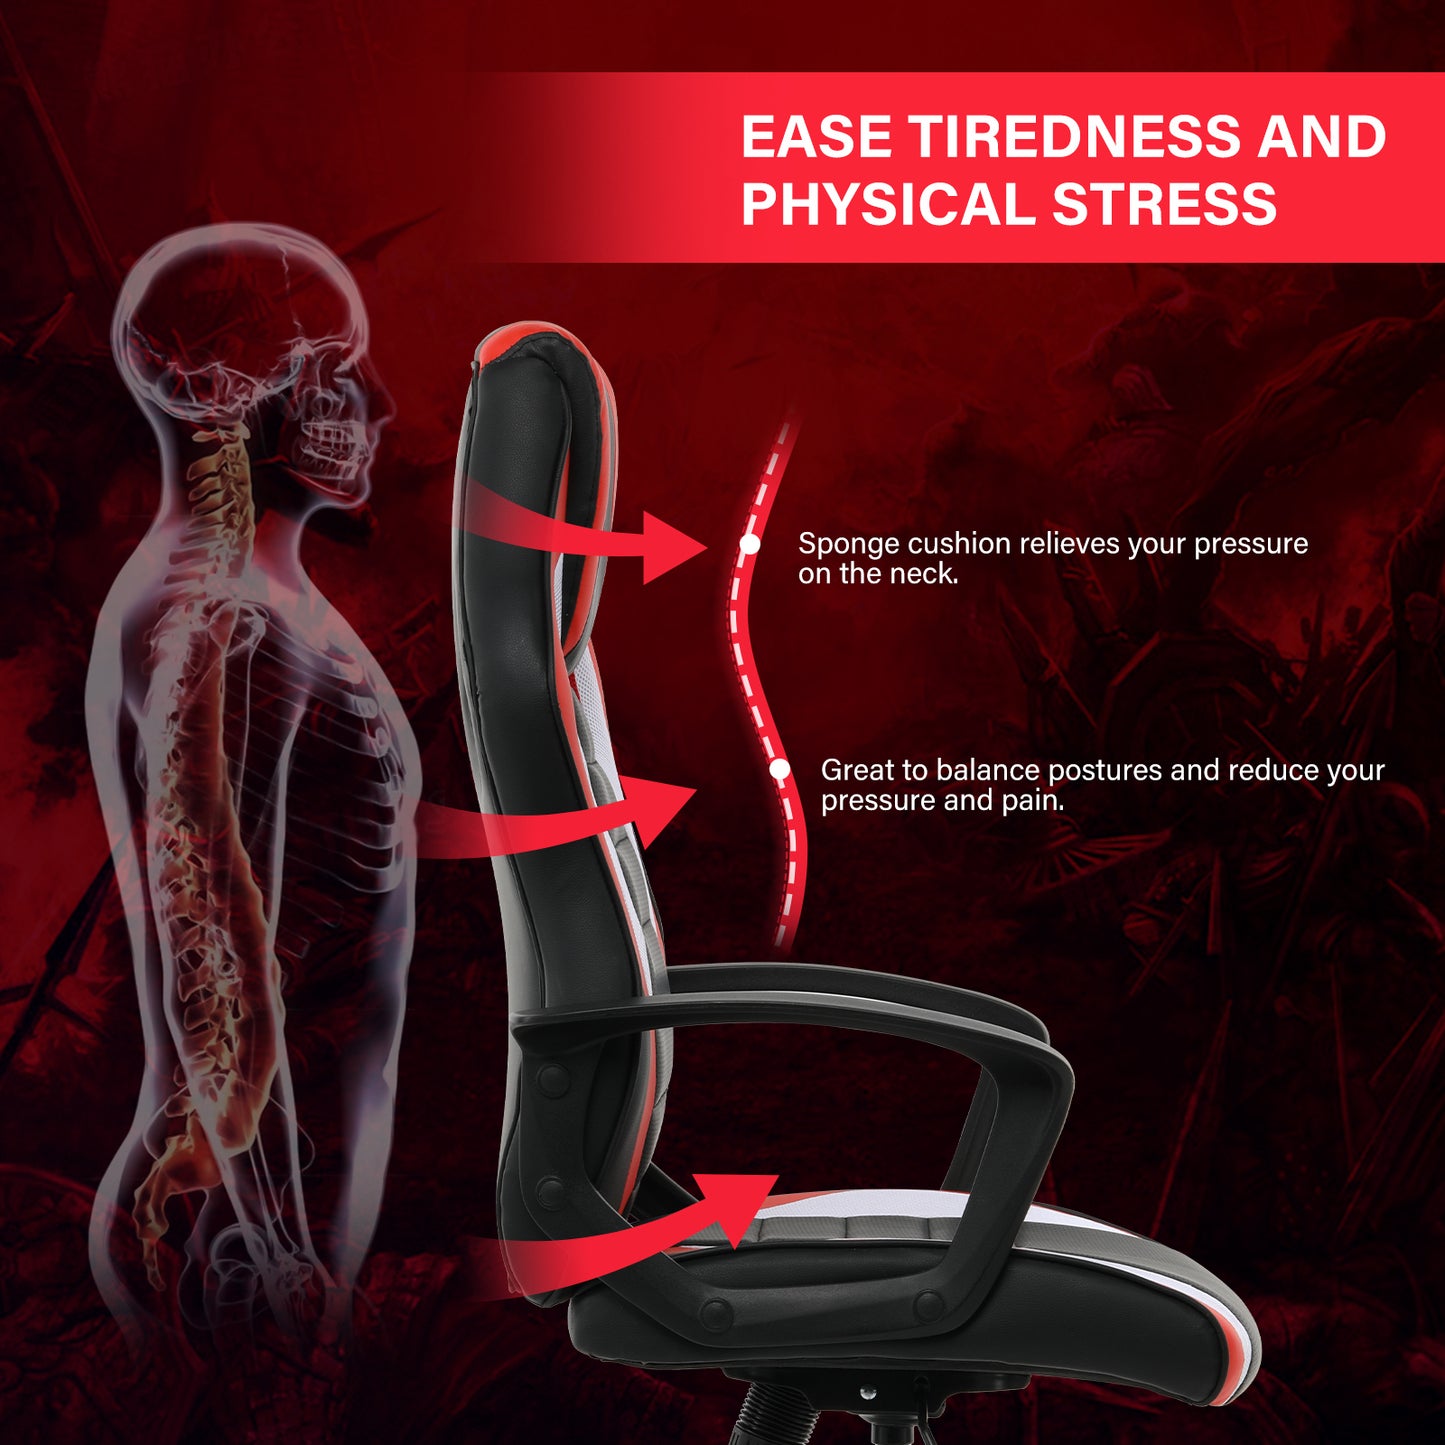 YSSOA Gaming Office High Back Computer Ergonomic Adjustable Swivel Chair, Black/Red/White